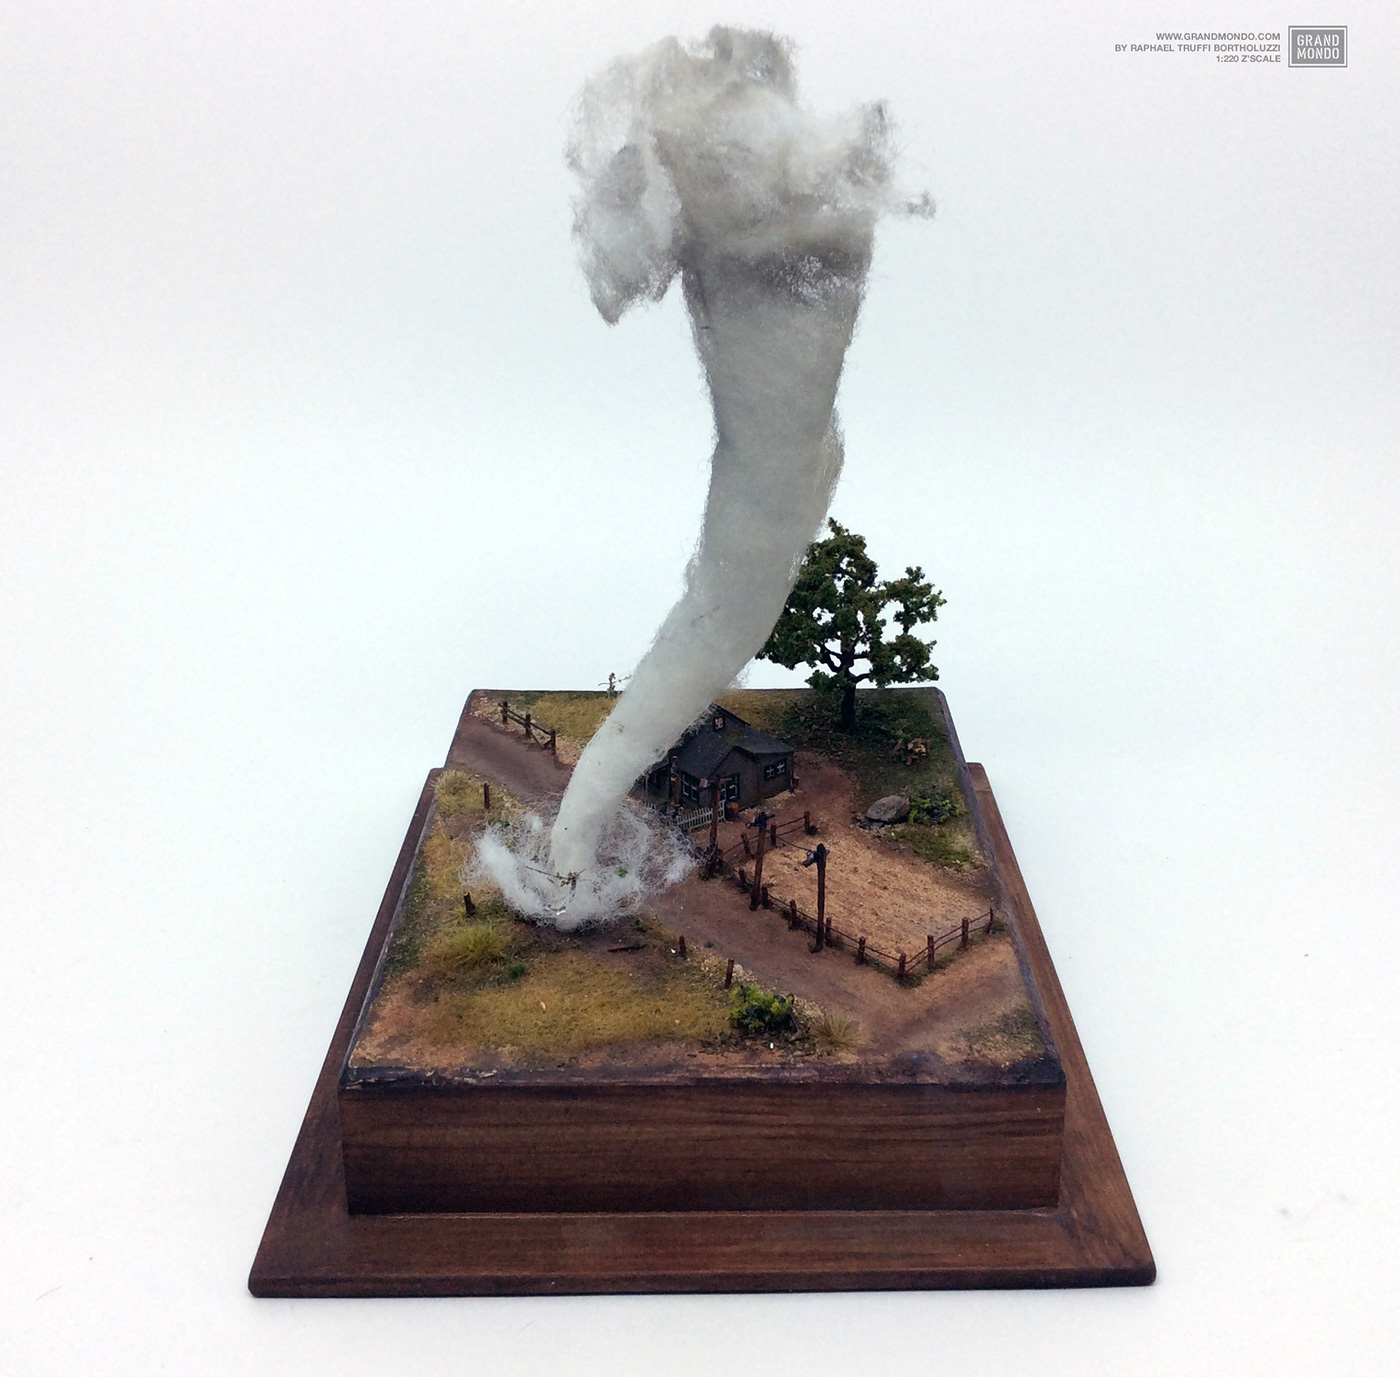 Miniature grandmondo raphael bortholuzzi wizard of oz Diorama handmade craft scale Movies replica